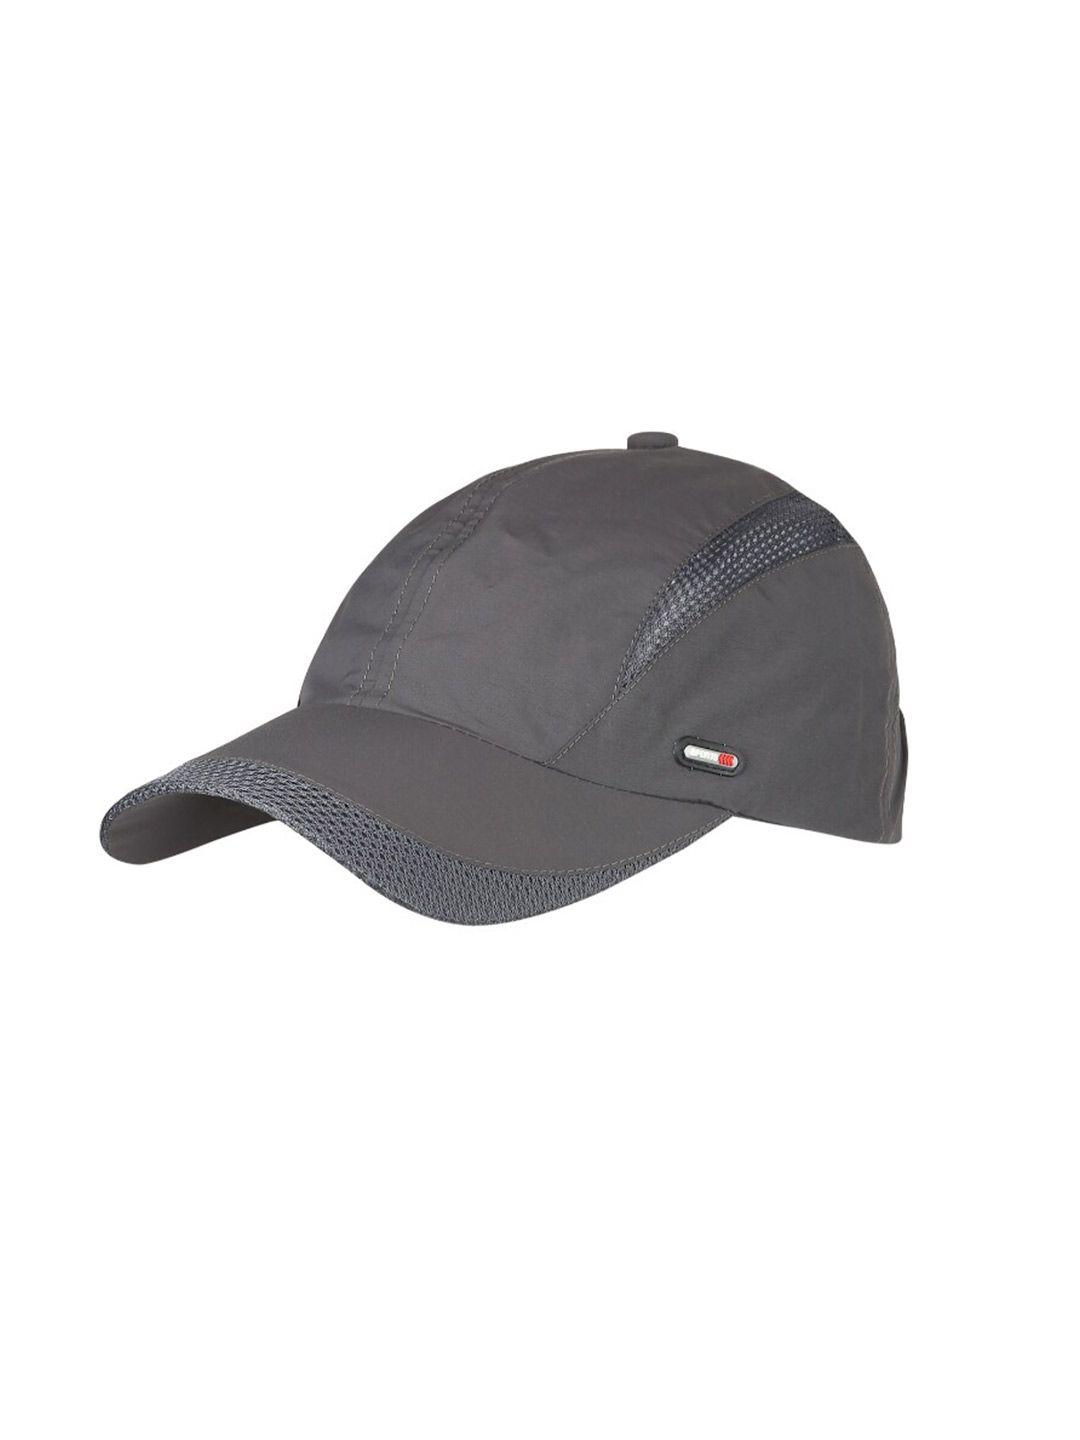 isweven grey snapback cap